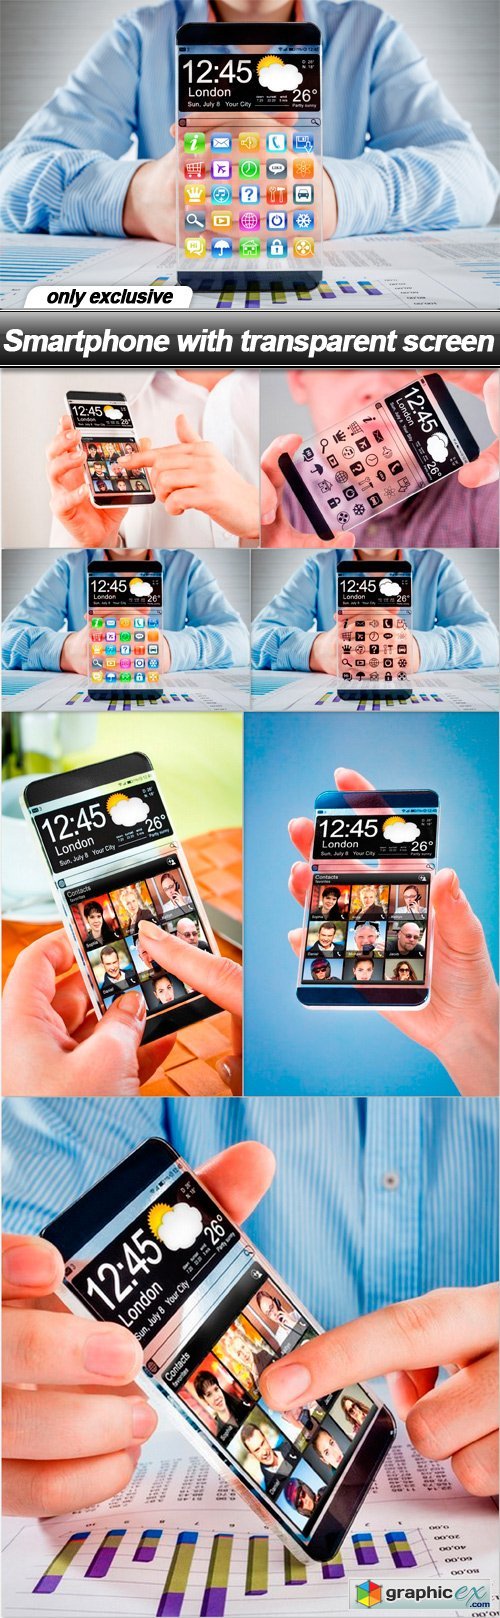 Smartphone with transparent screen - 7 UHQ JPEG